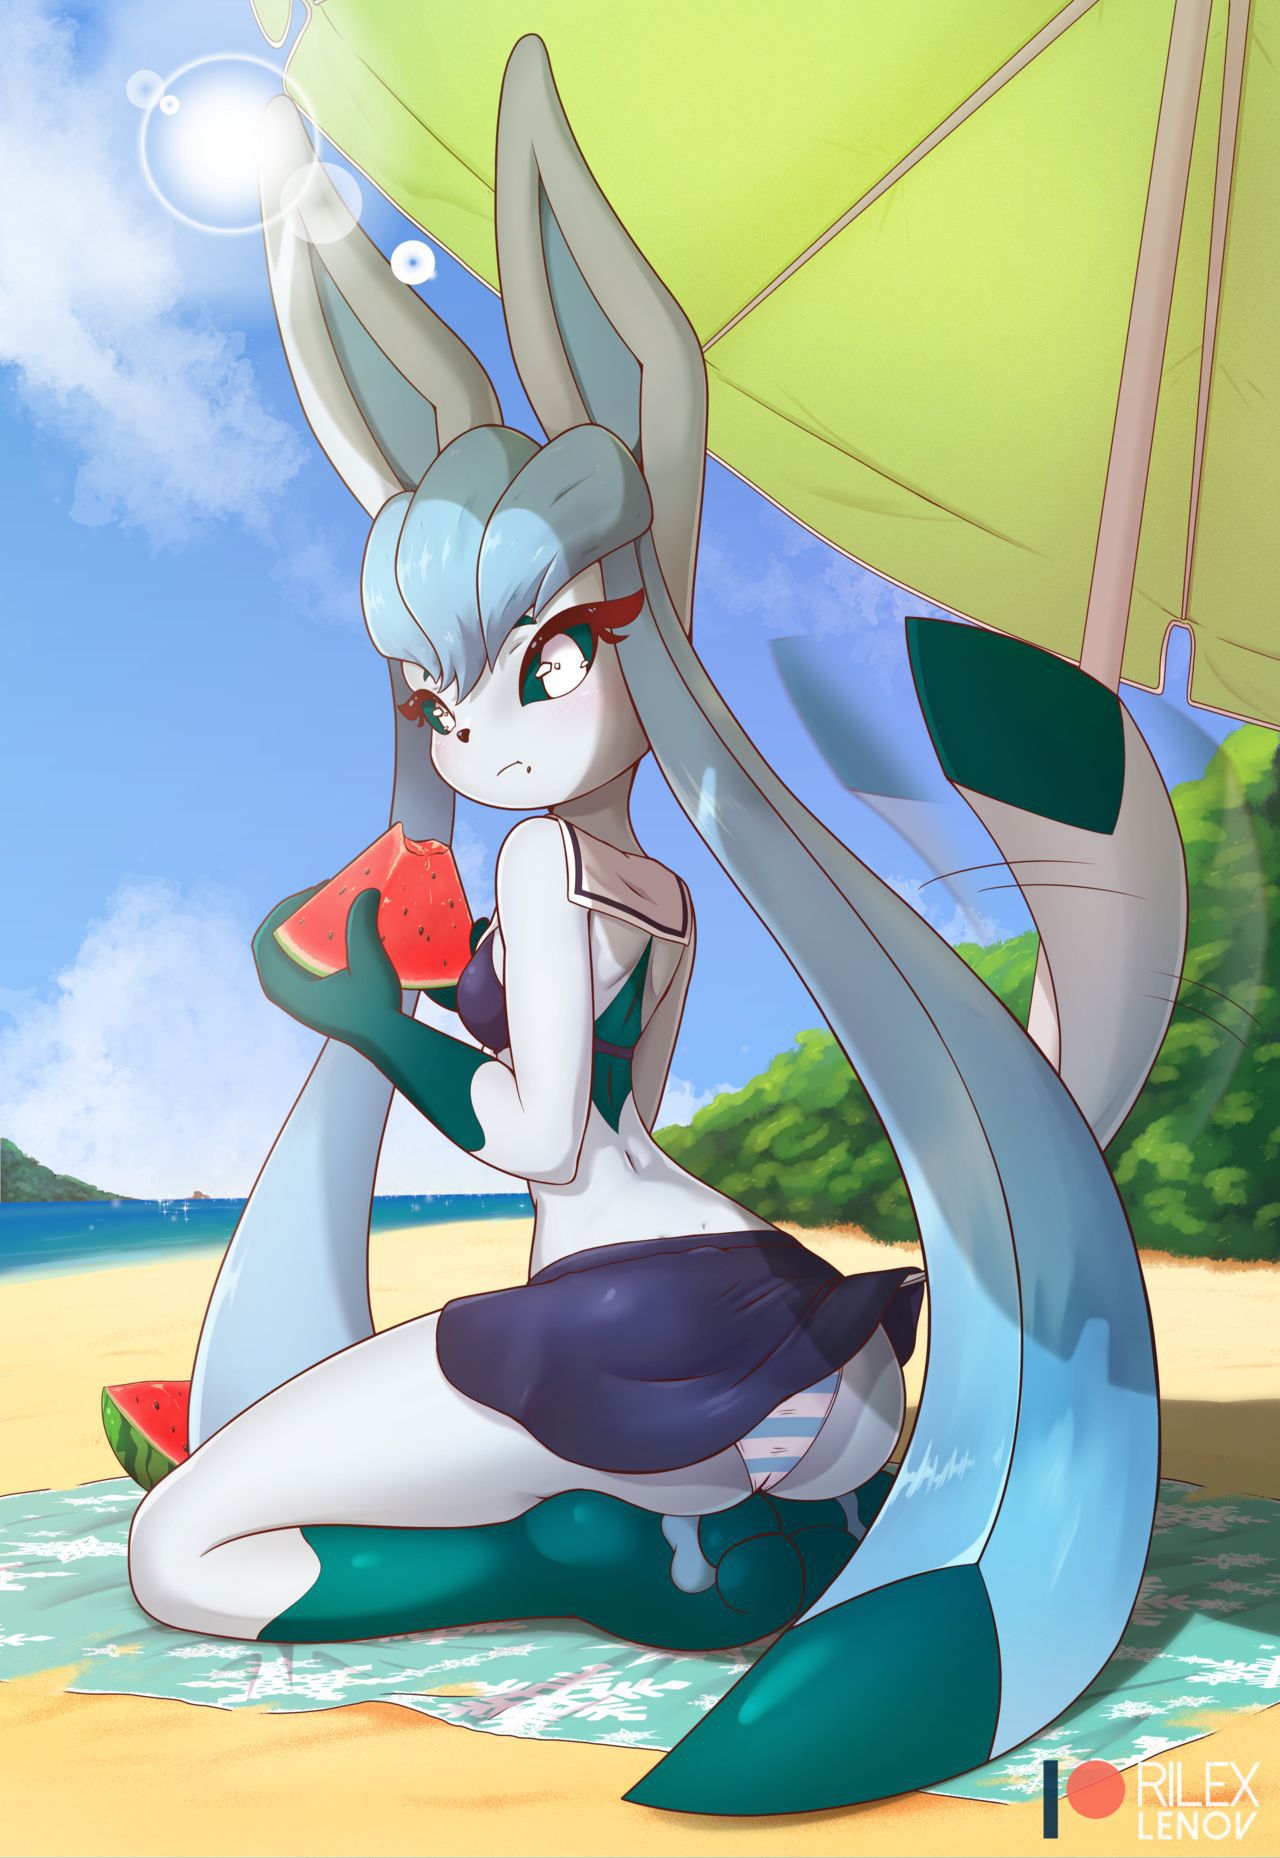 [Rilex Lenov] Pokemon Summer Vacation 46